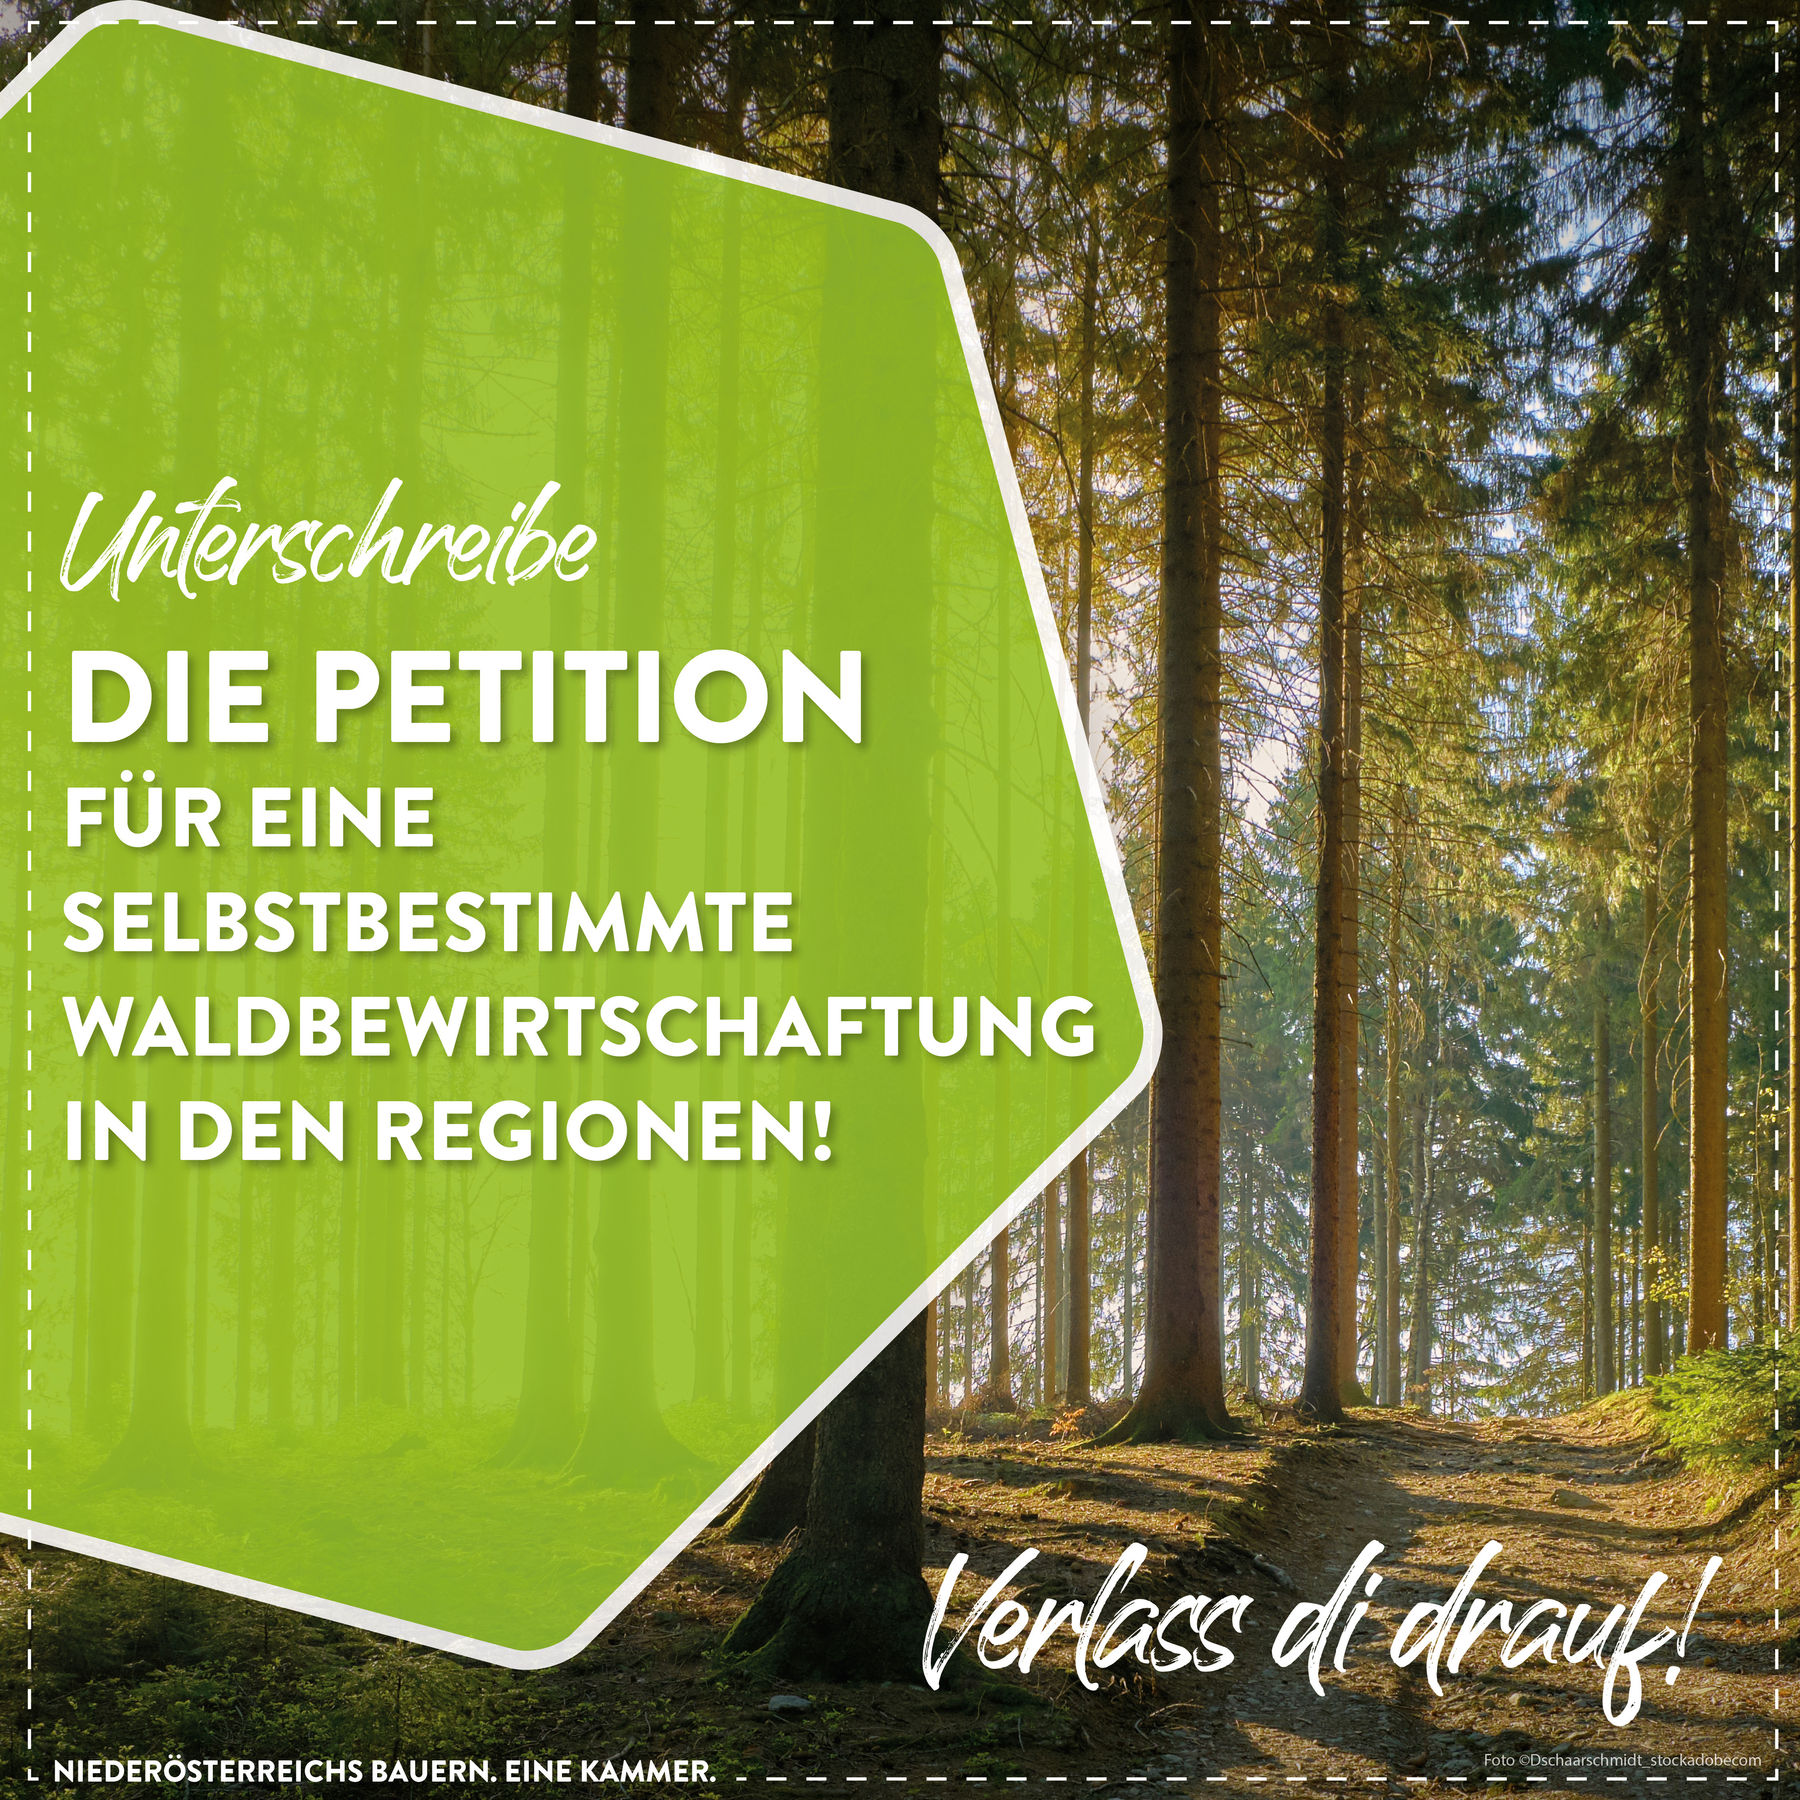 Posting Petition Wald.jpg